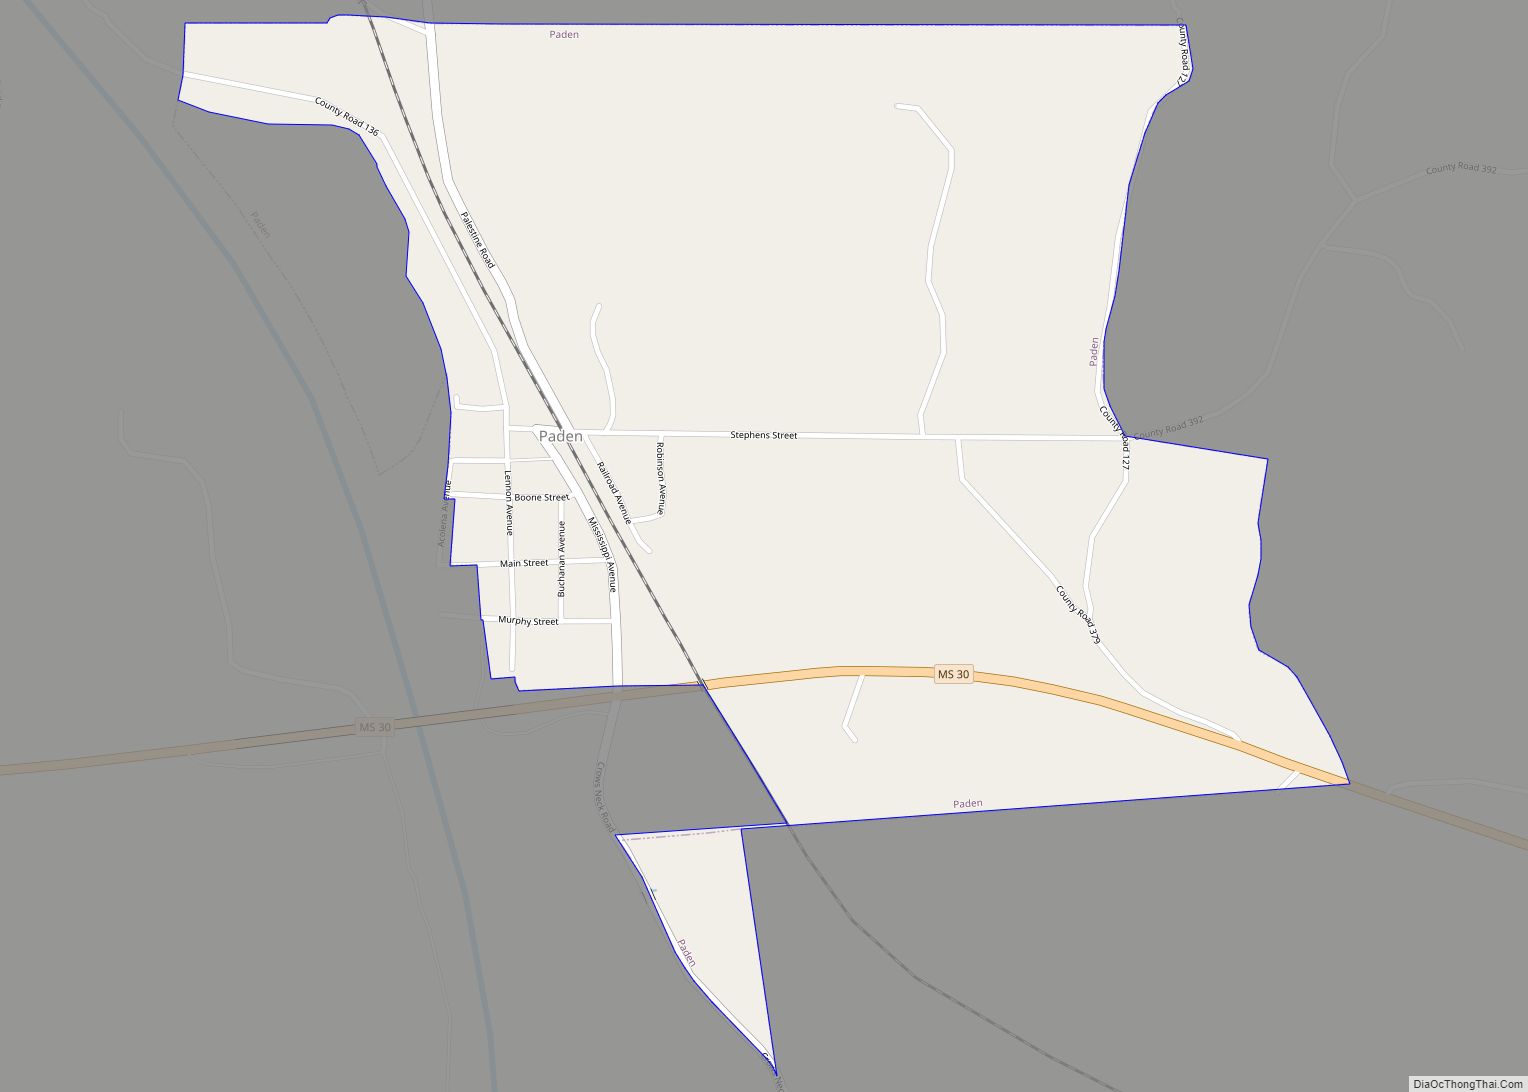 Map of Paden village